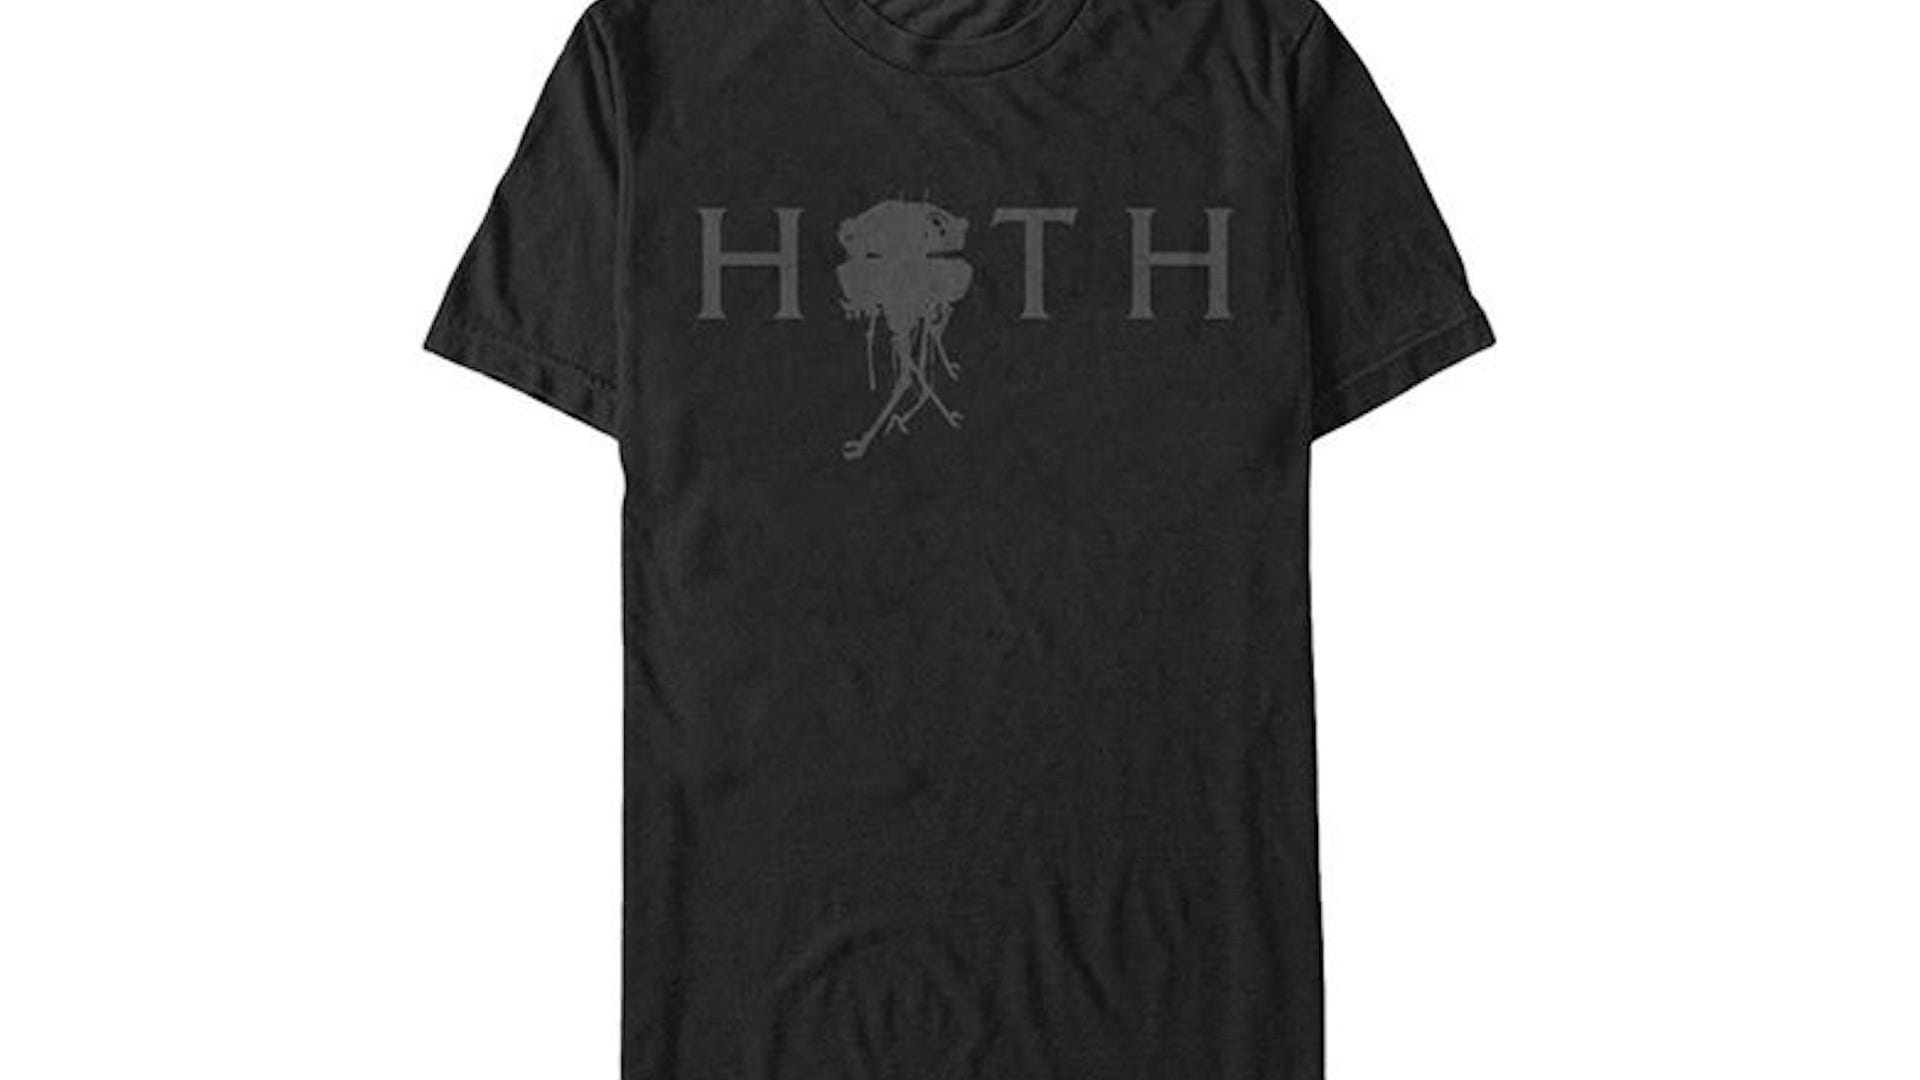 Hoth t-shirt